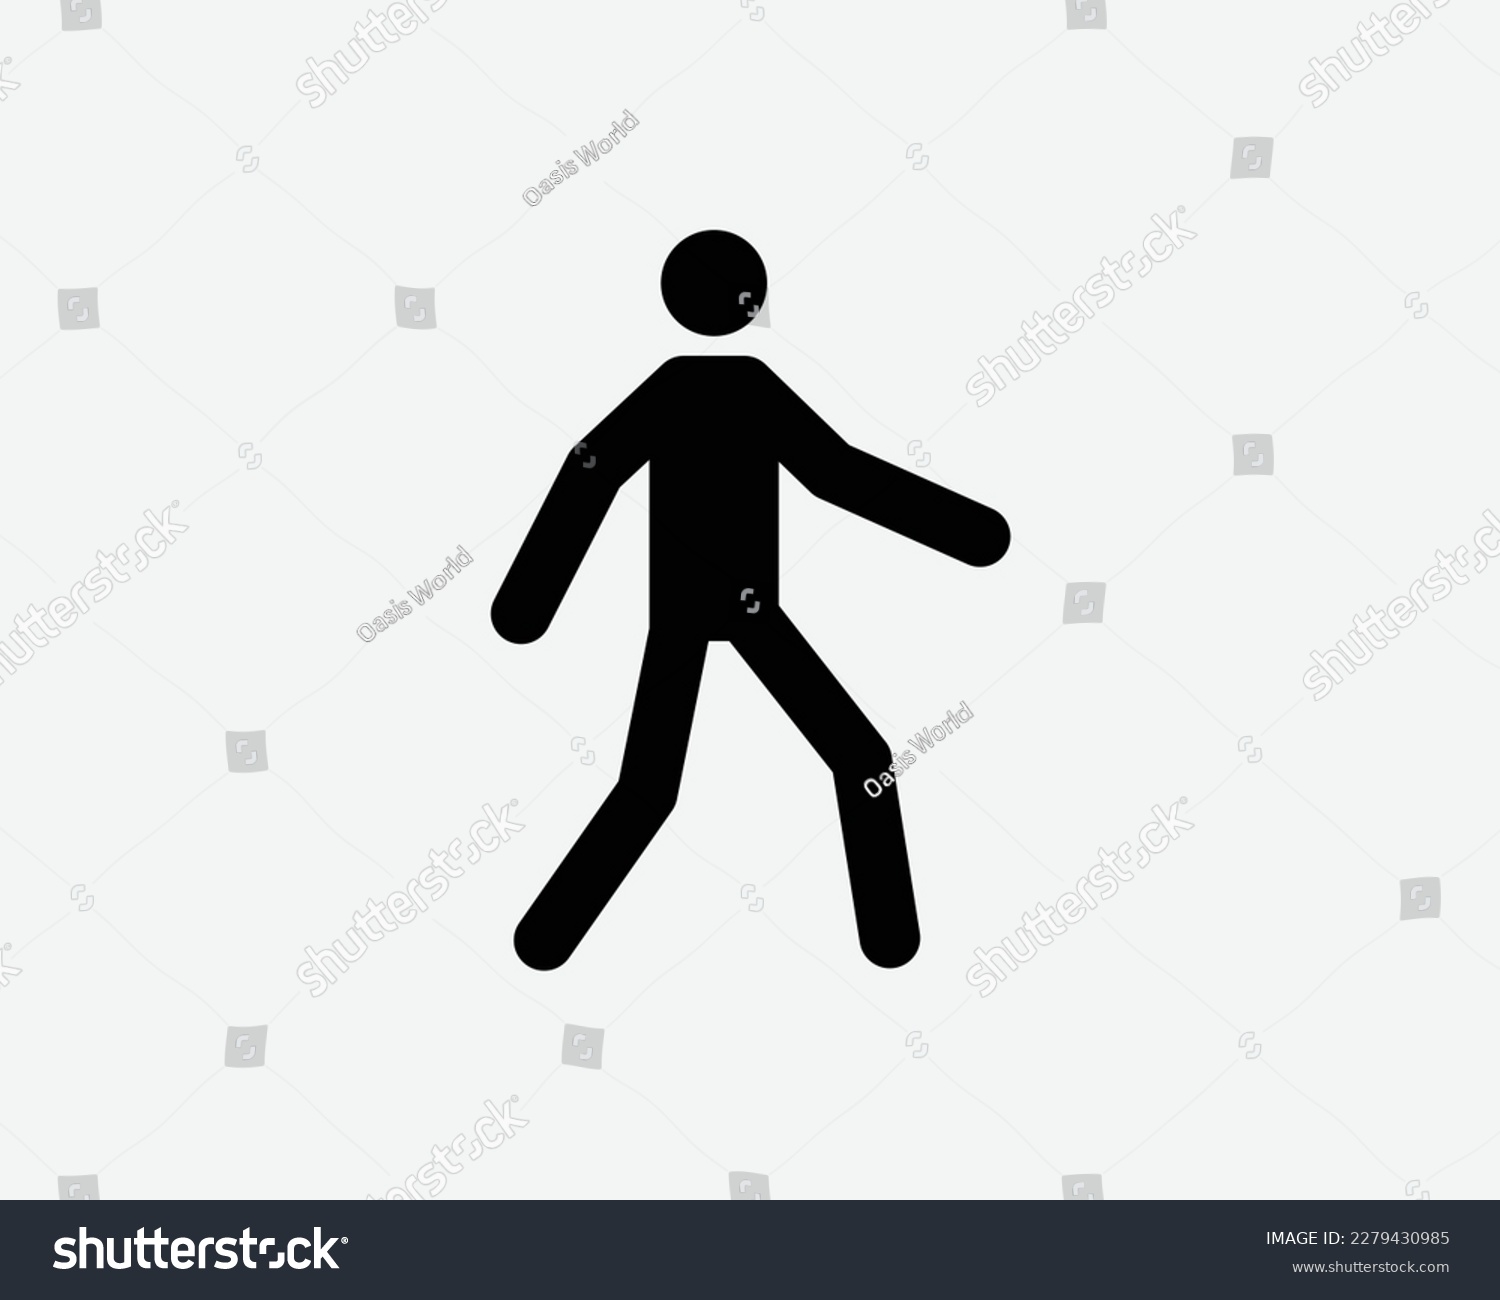 SVG of Pedestrian Walking Man Stick Figure Walk Cross Crossing Black White Silhouette Symbol Icon Sign Graphic Clipart Artwork Illustration Pictogram Vector svg